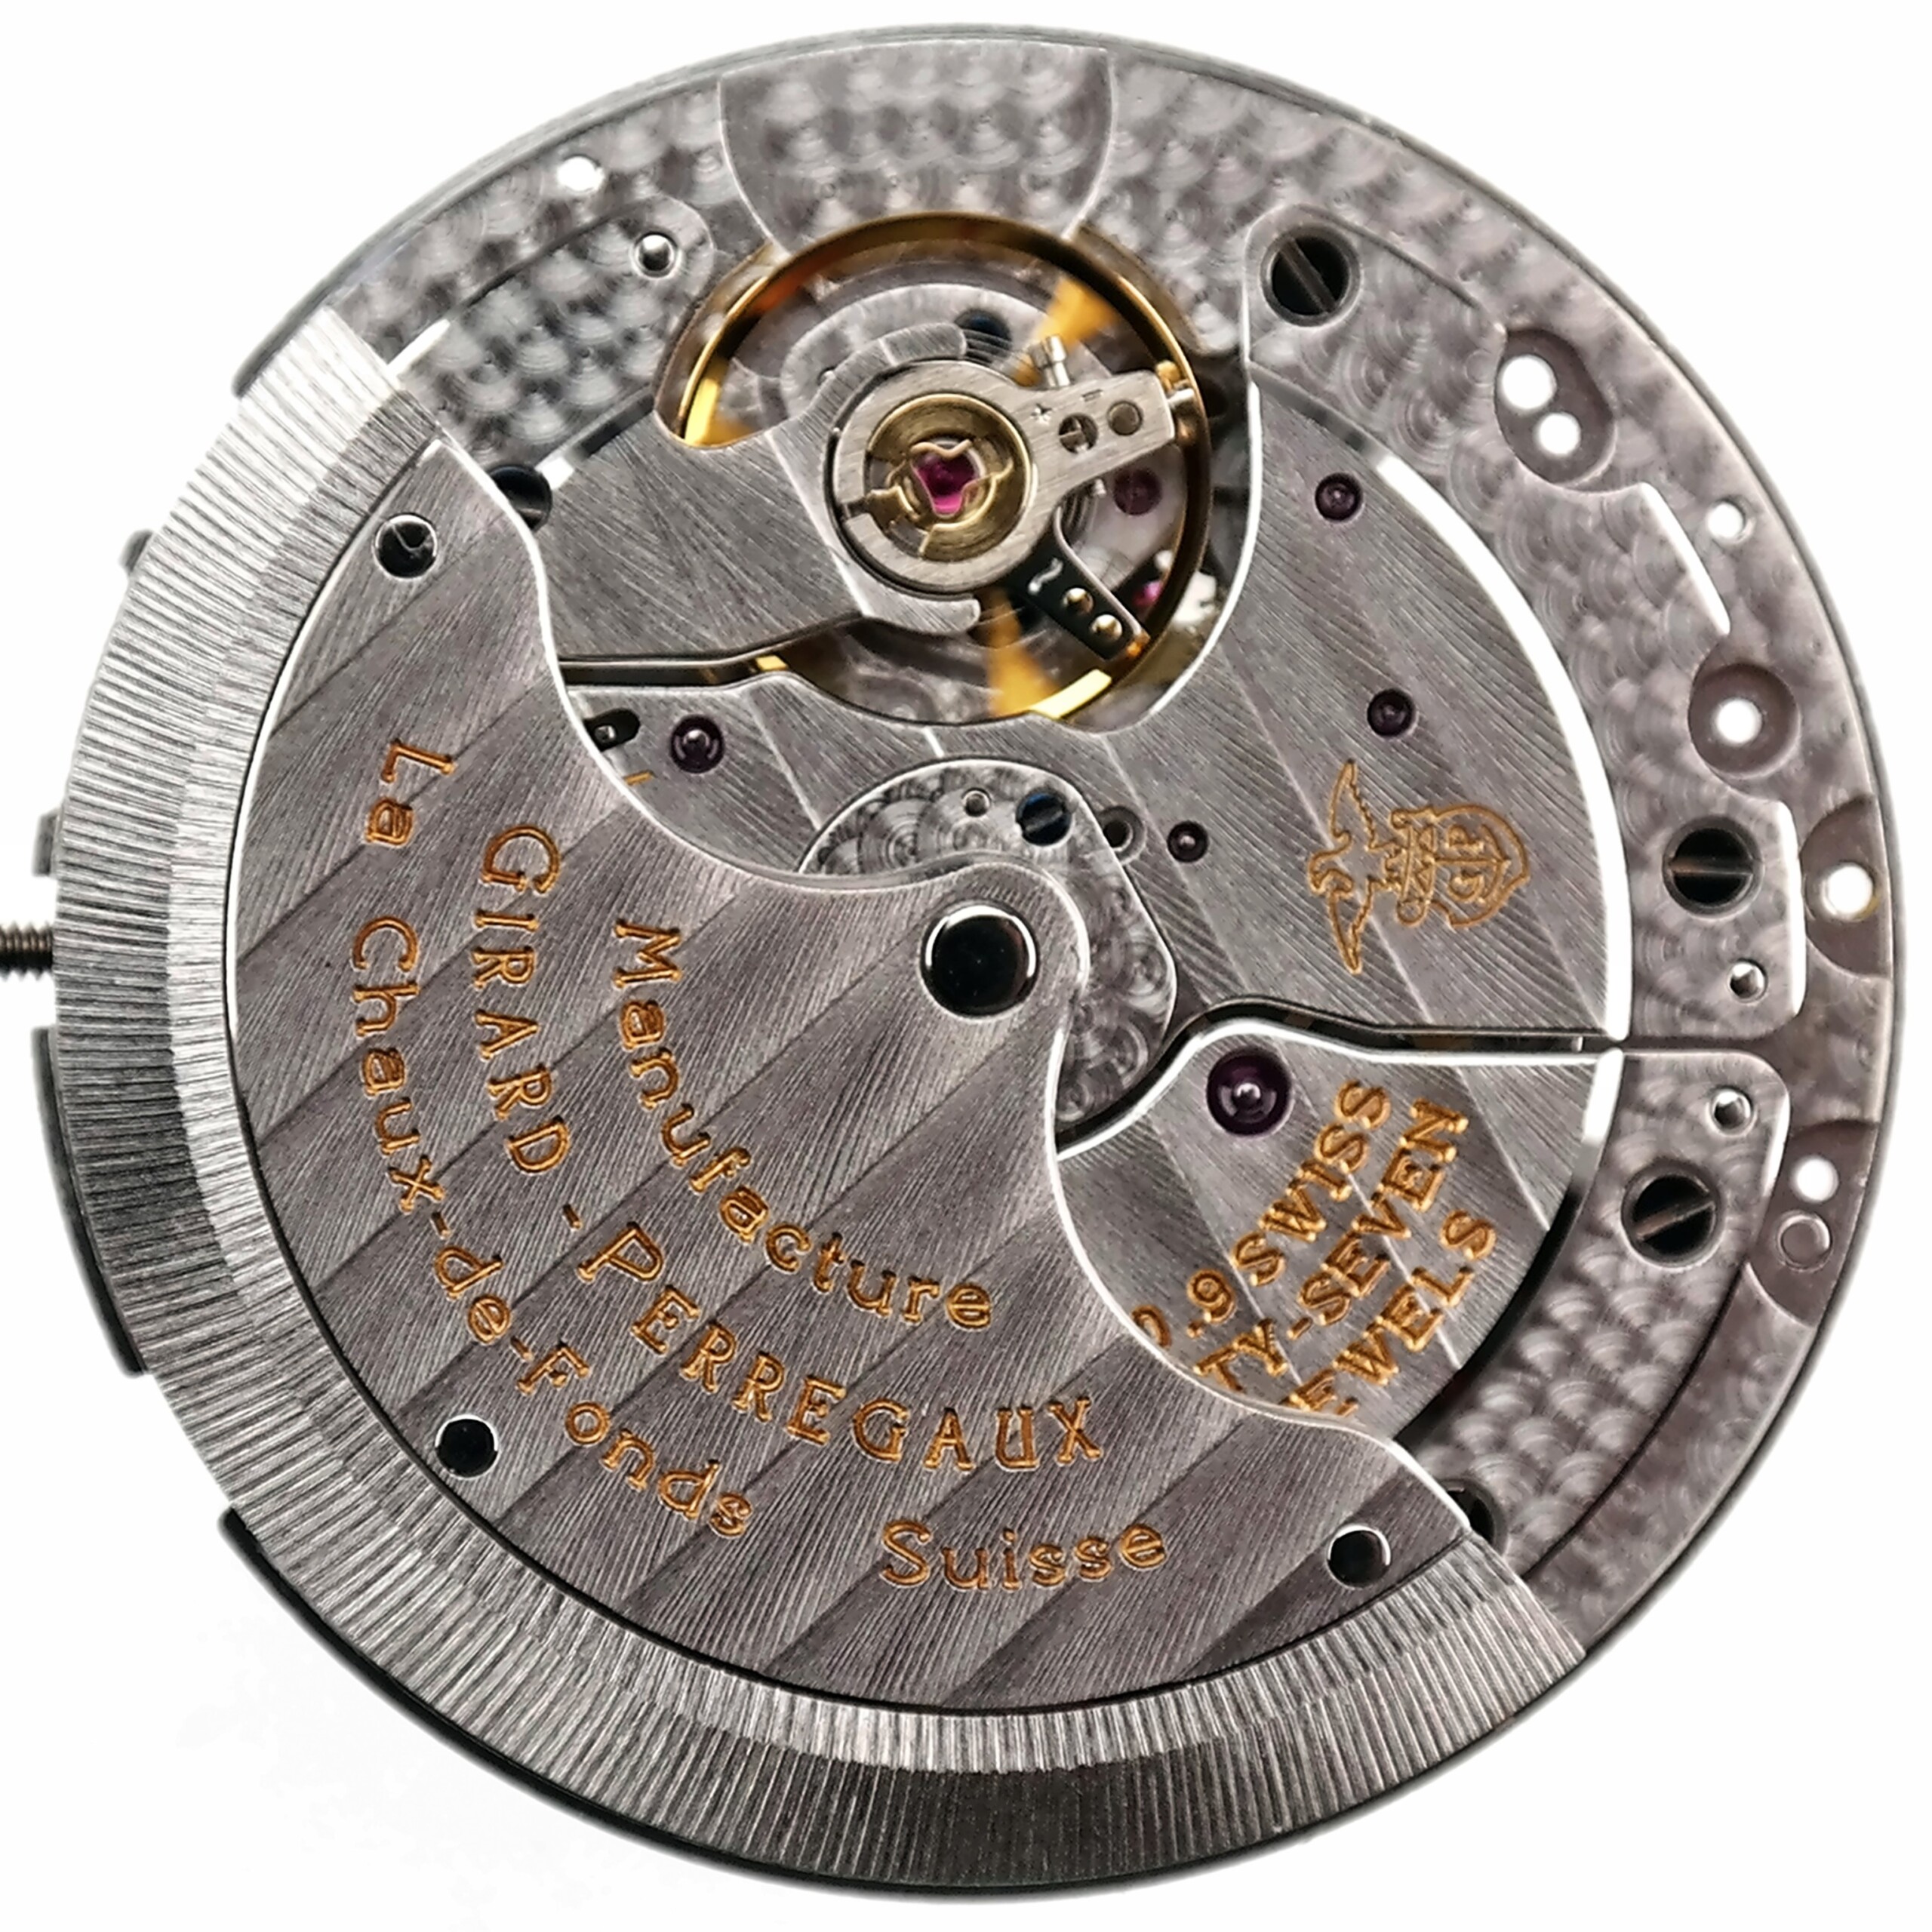 girard perregaux calibre 33g0.9 automatic watch movement